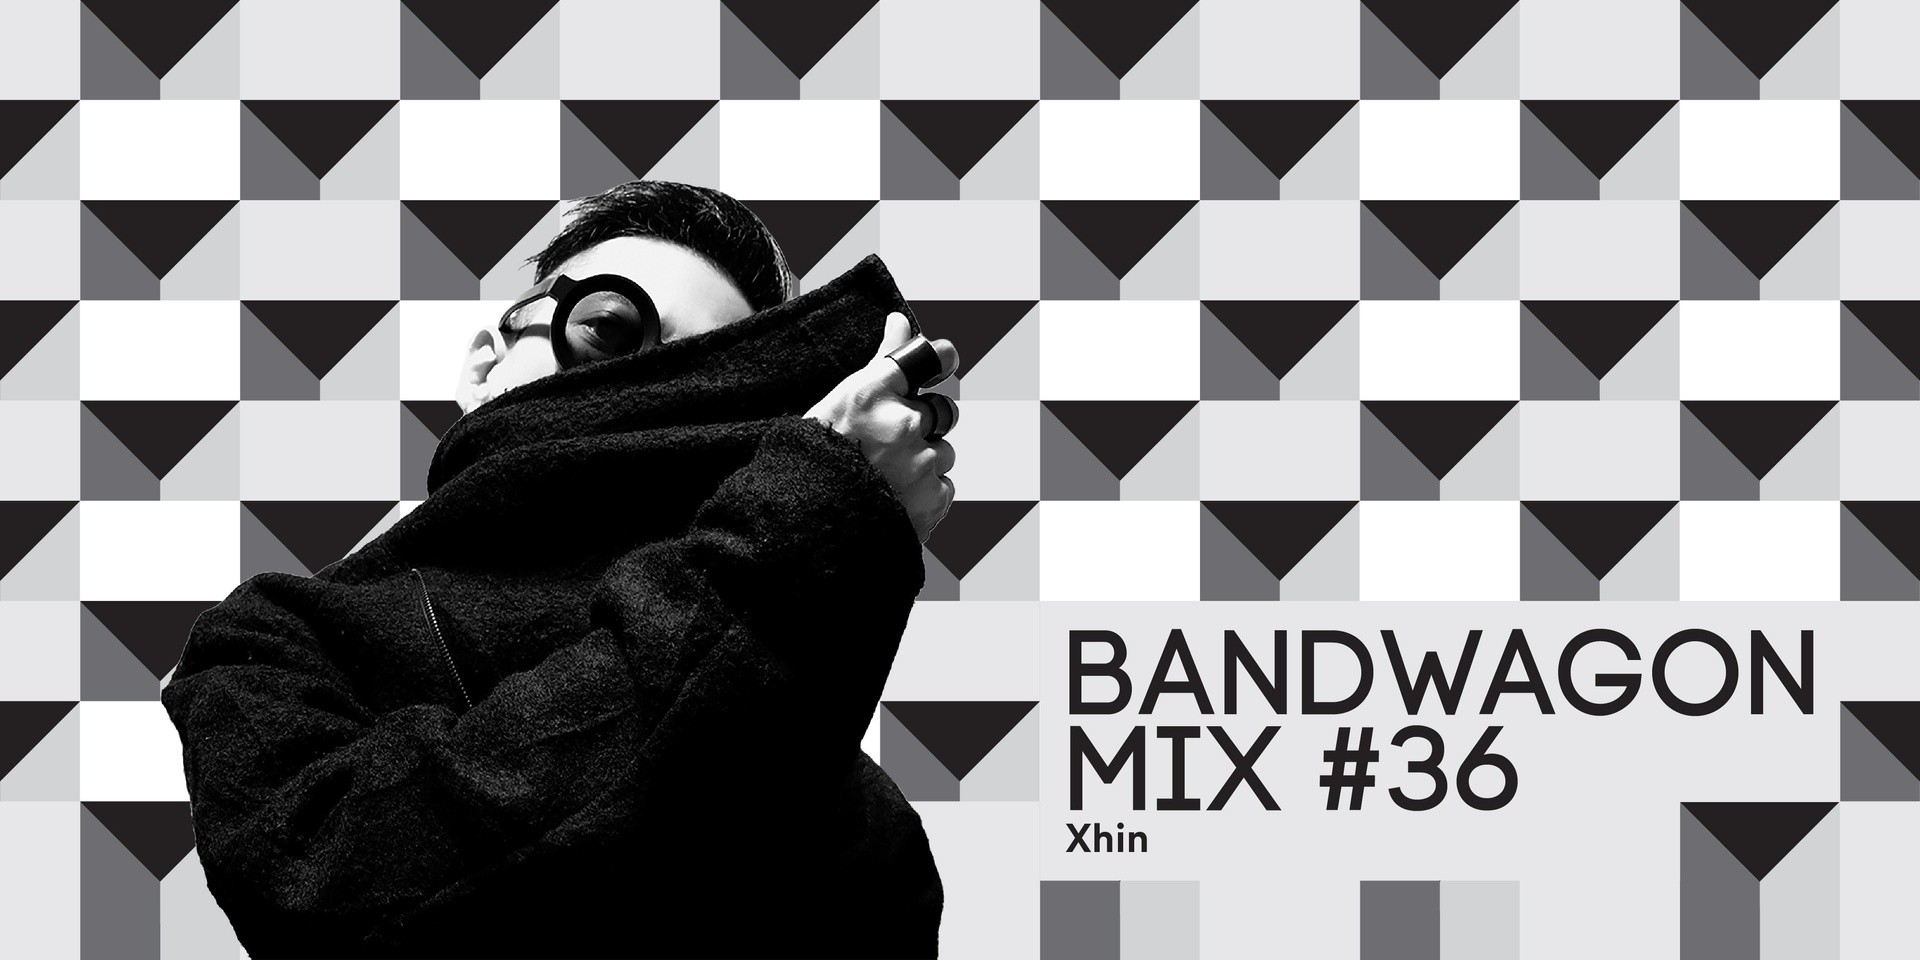 Bandwagon Mix #36: Xhin